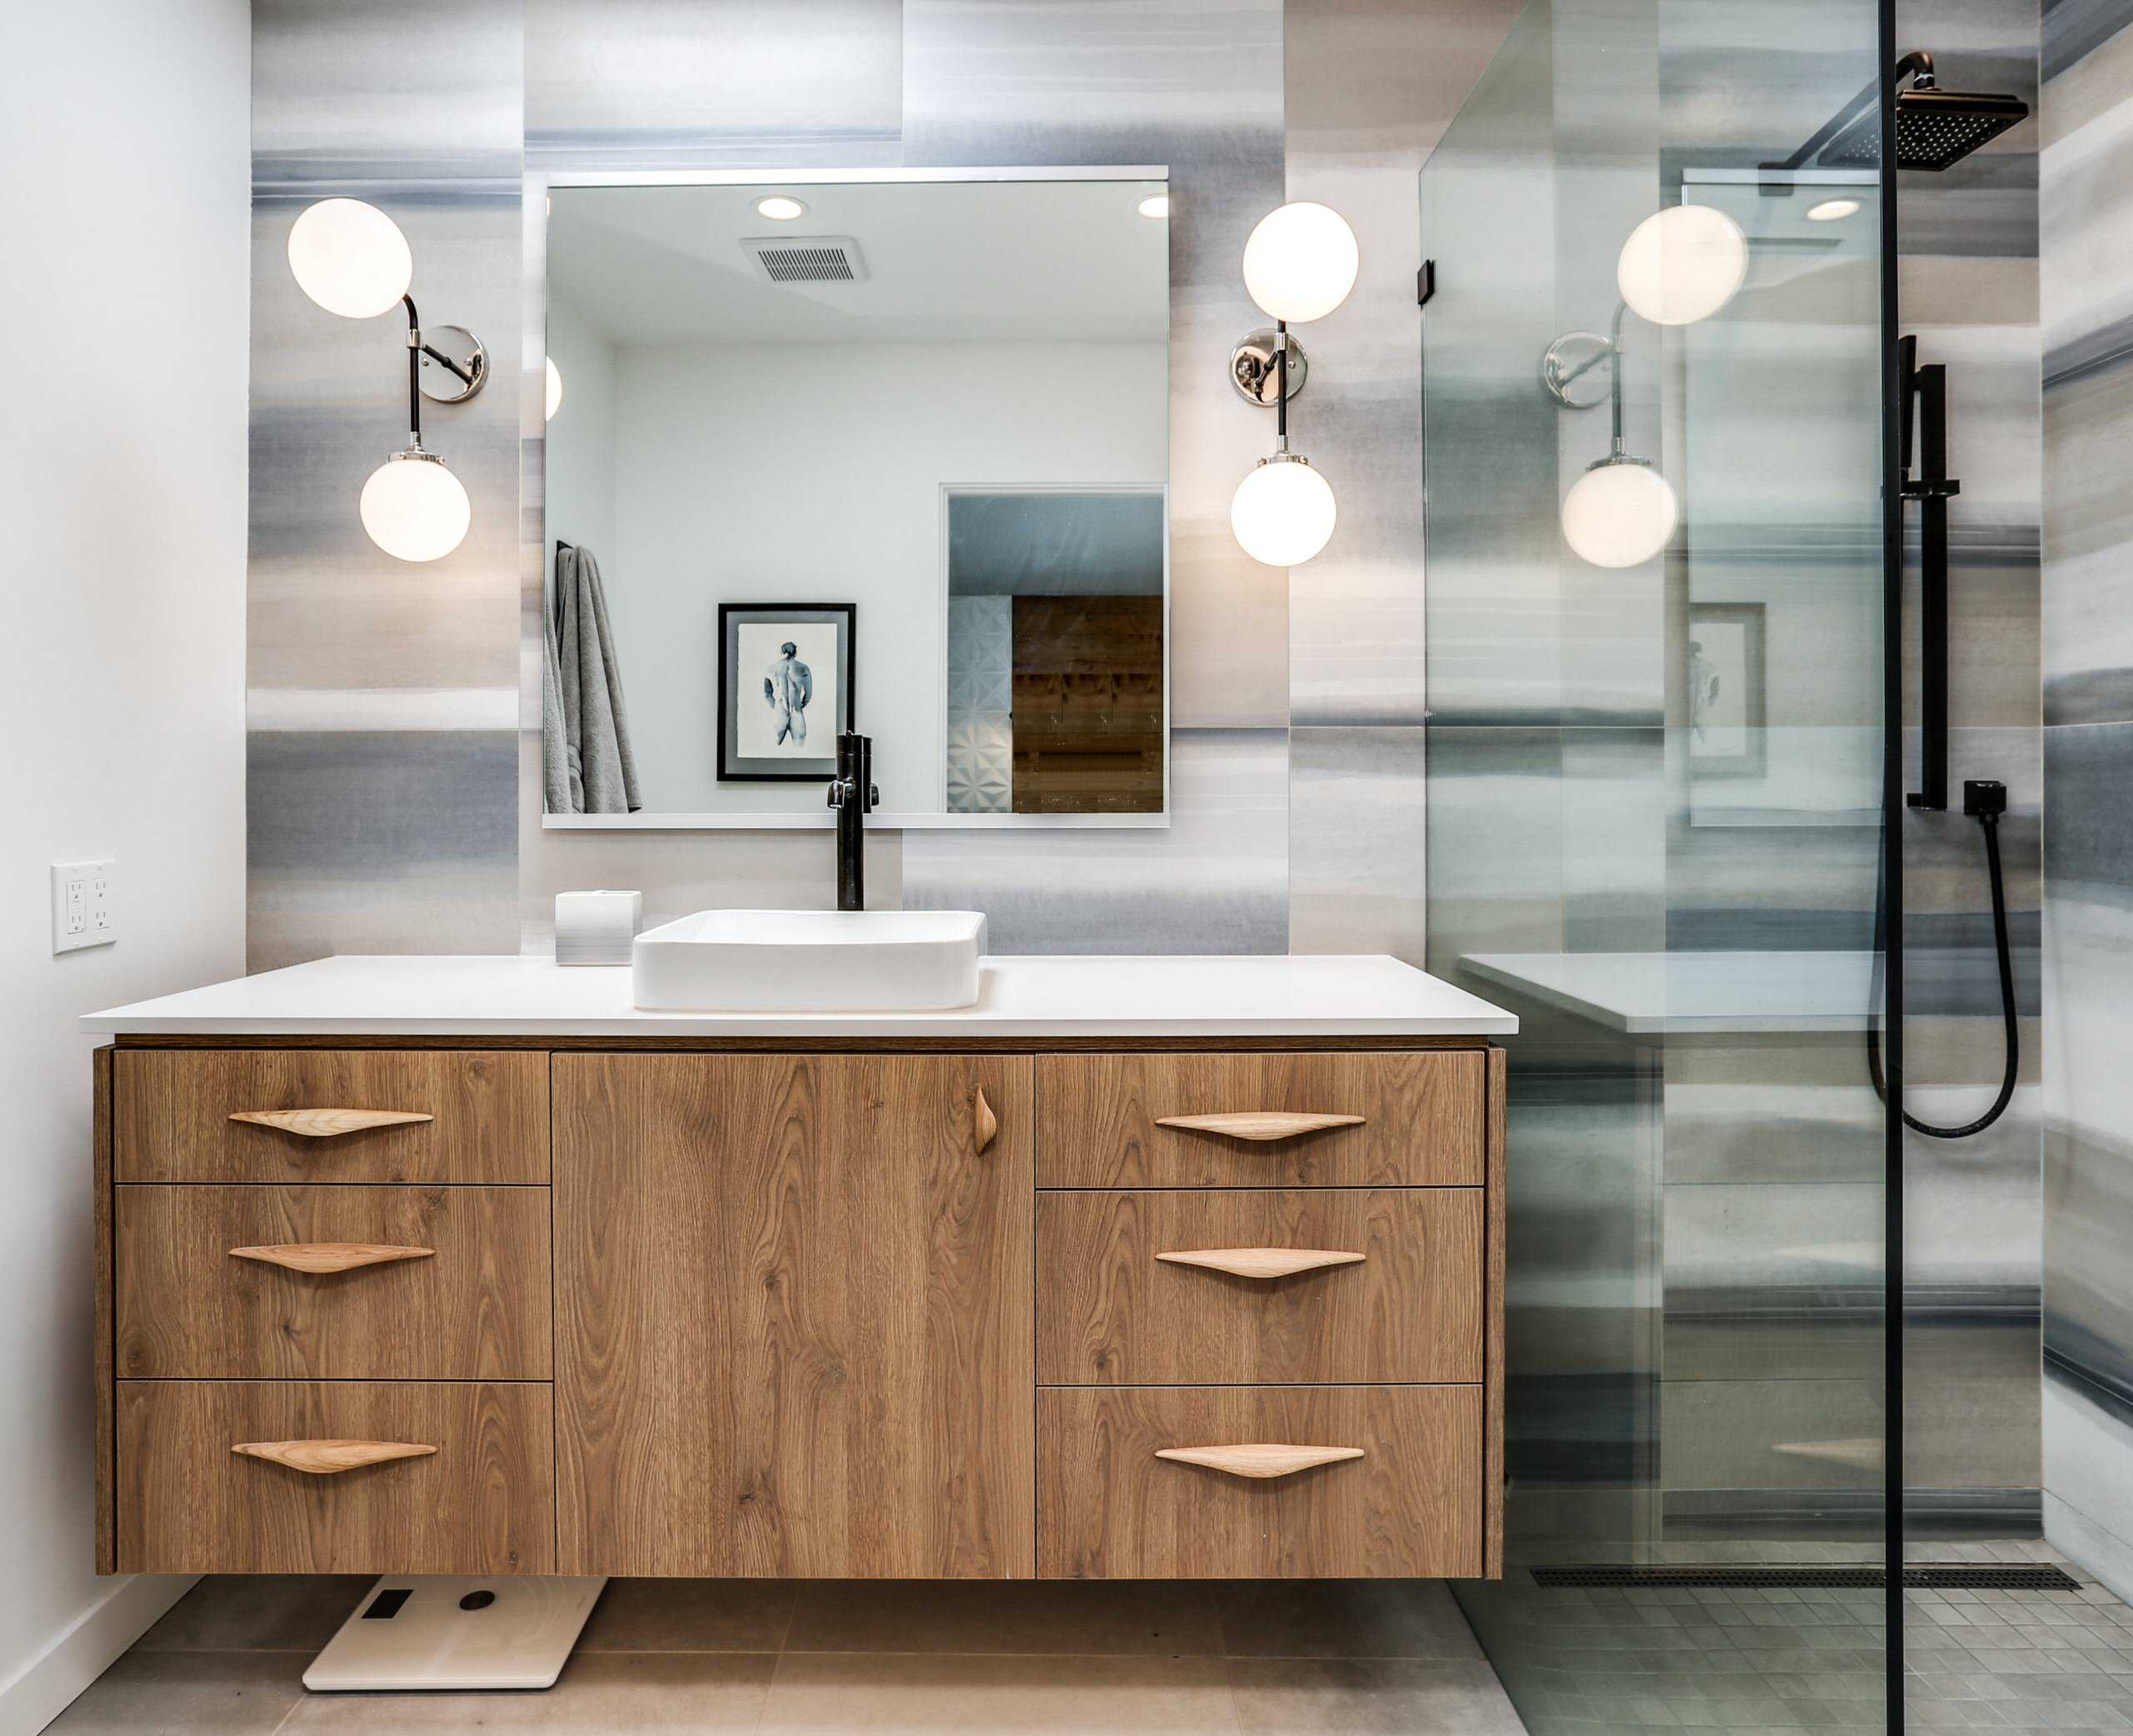 20 Impressive Mid-Century Modern Bathroom Designs You Must See - 20 Impressive MiD Century MoDern Bathroom Designs You Must See 6